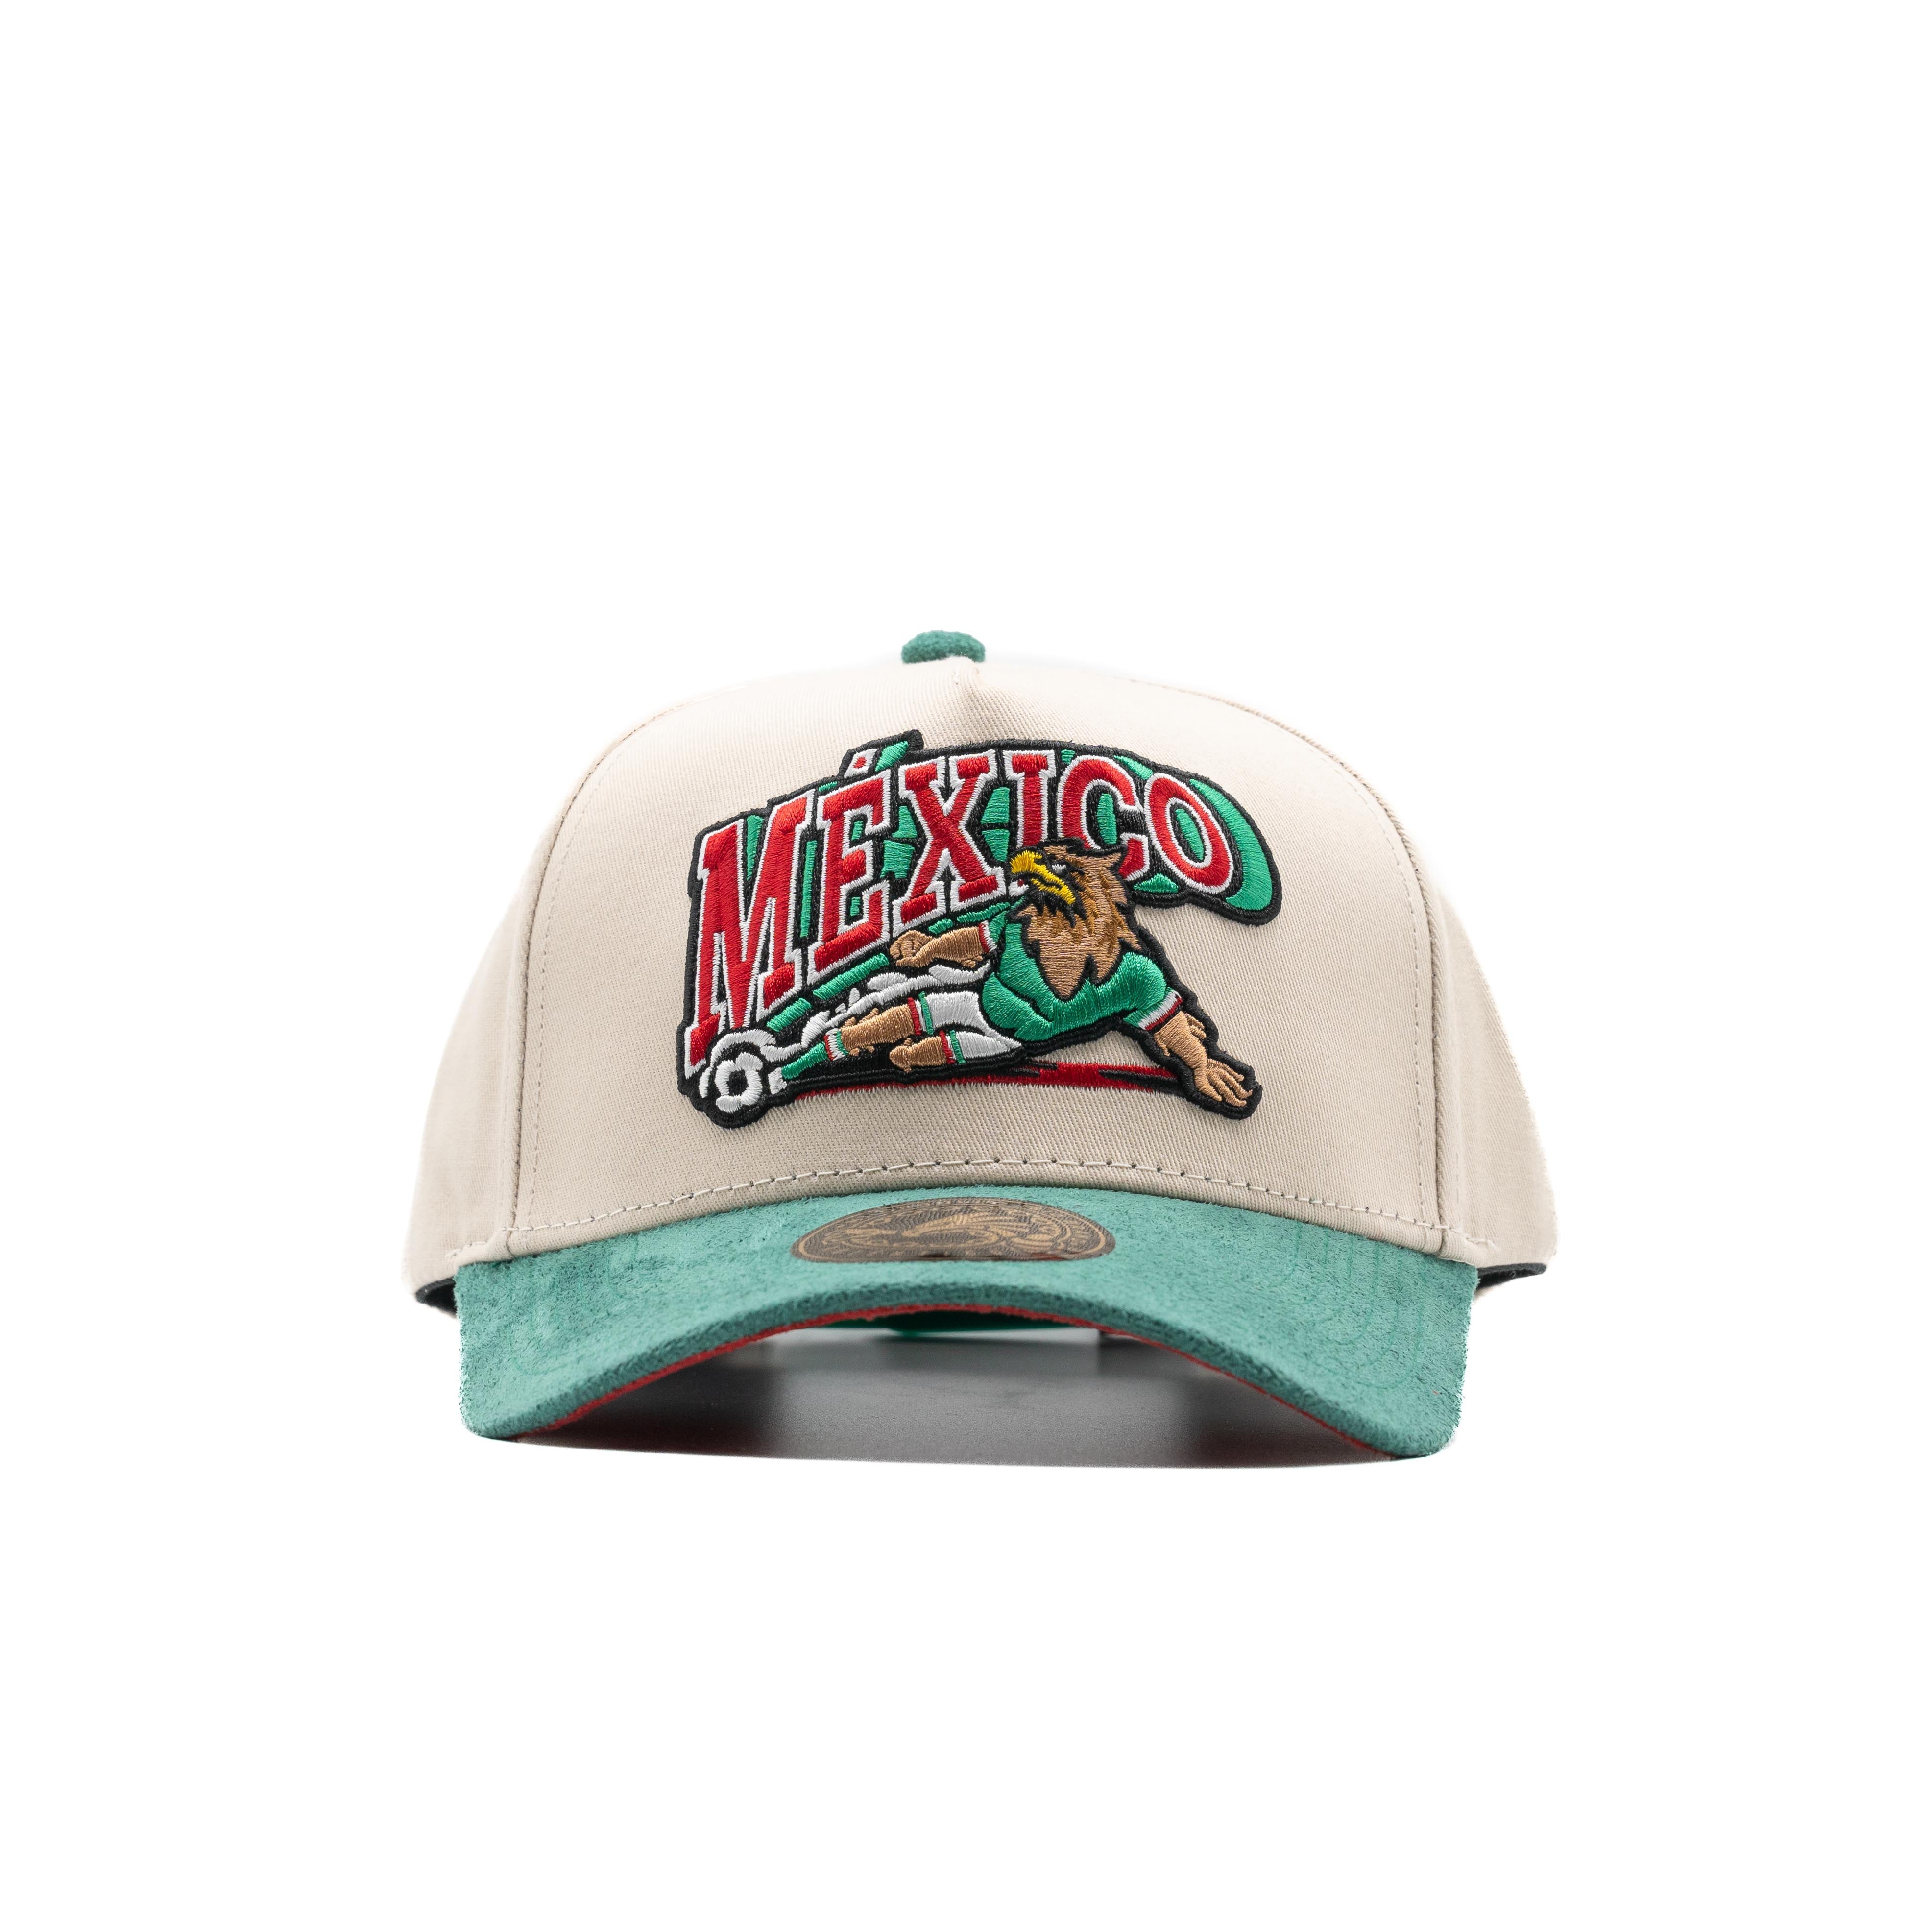 Mexico Baseball Hats – MI ORGULLO BRAND SnapBacks & Gorras 